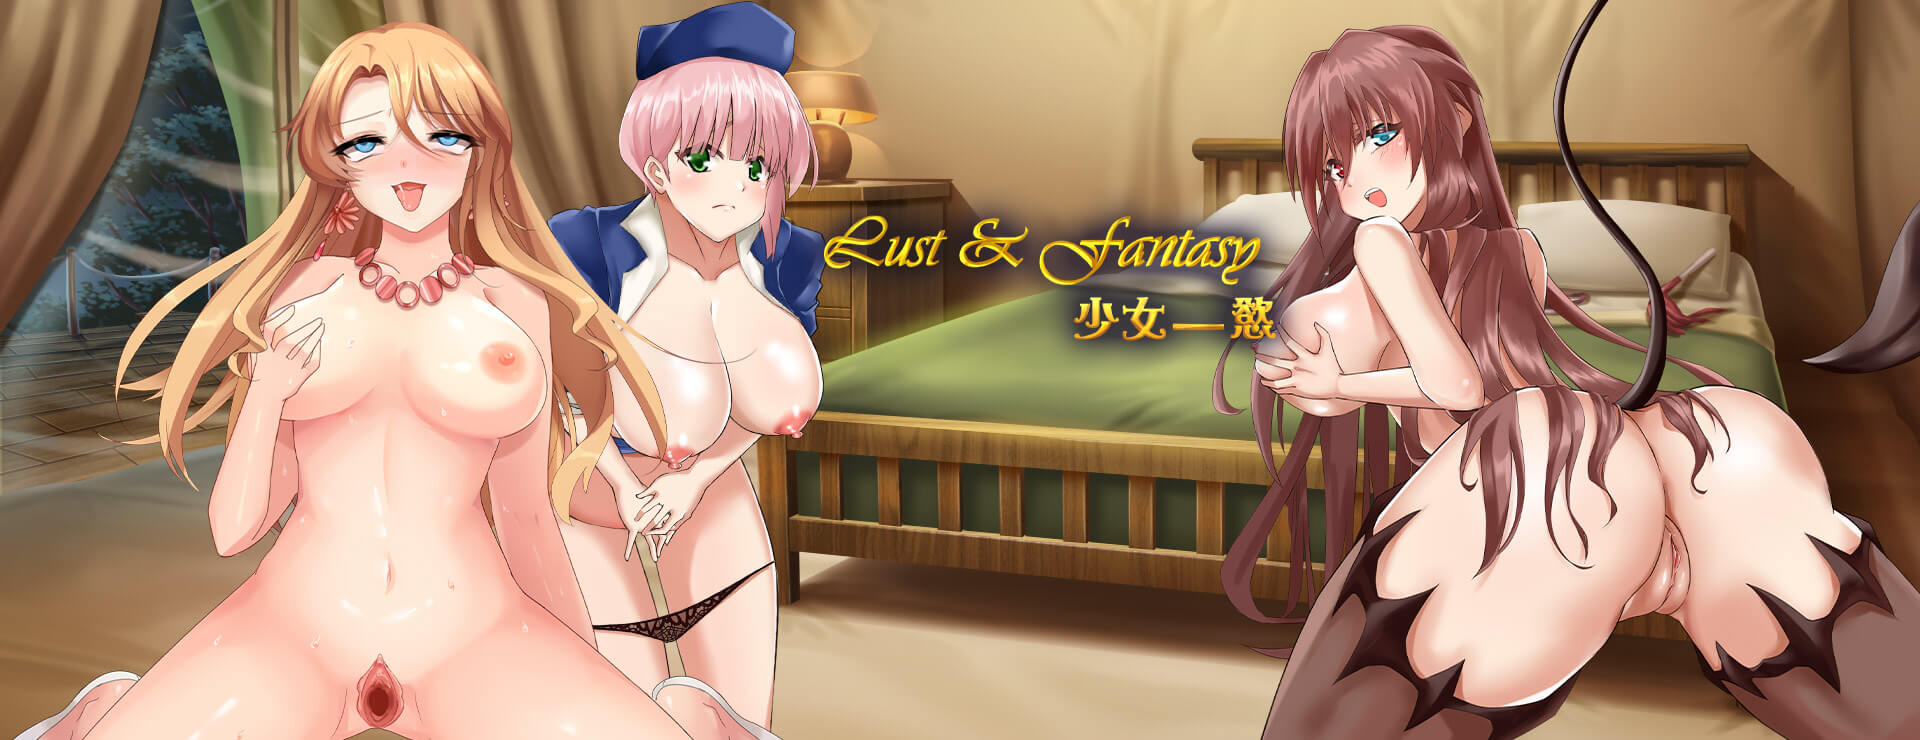 Lust & Fantasy - RPG Juego